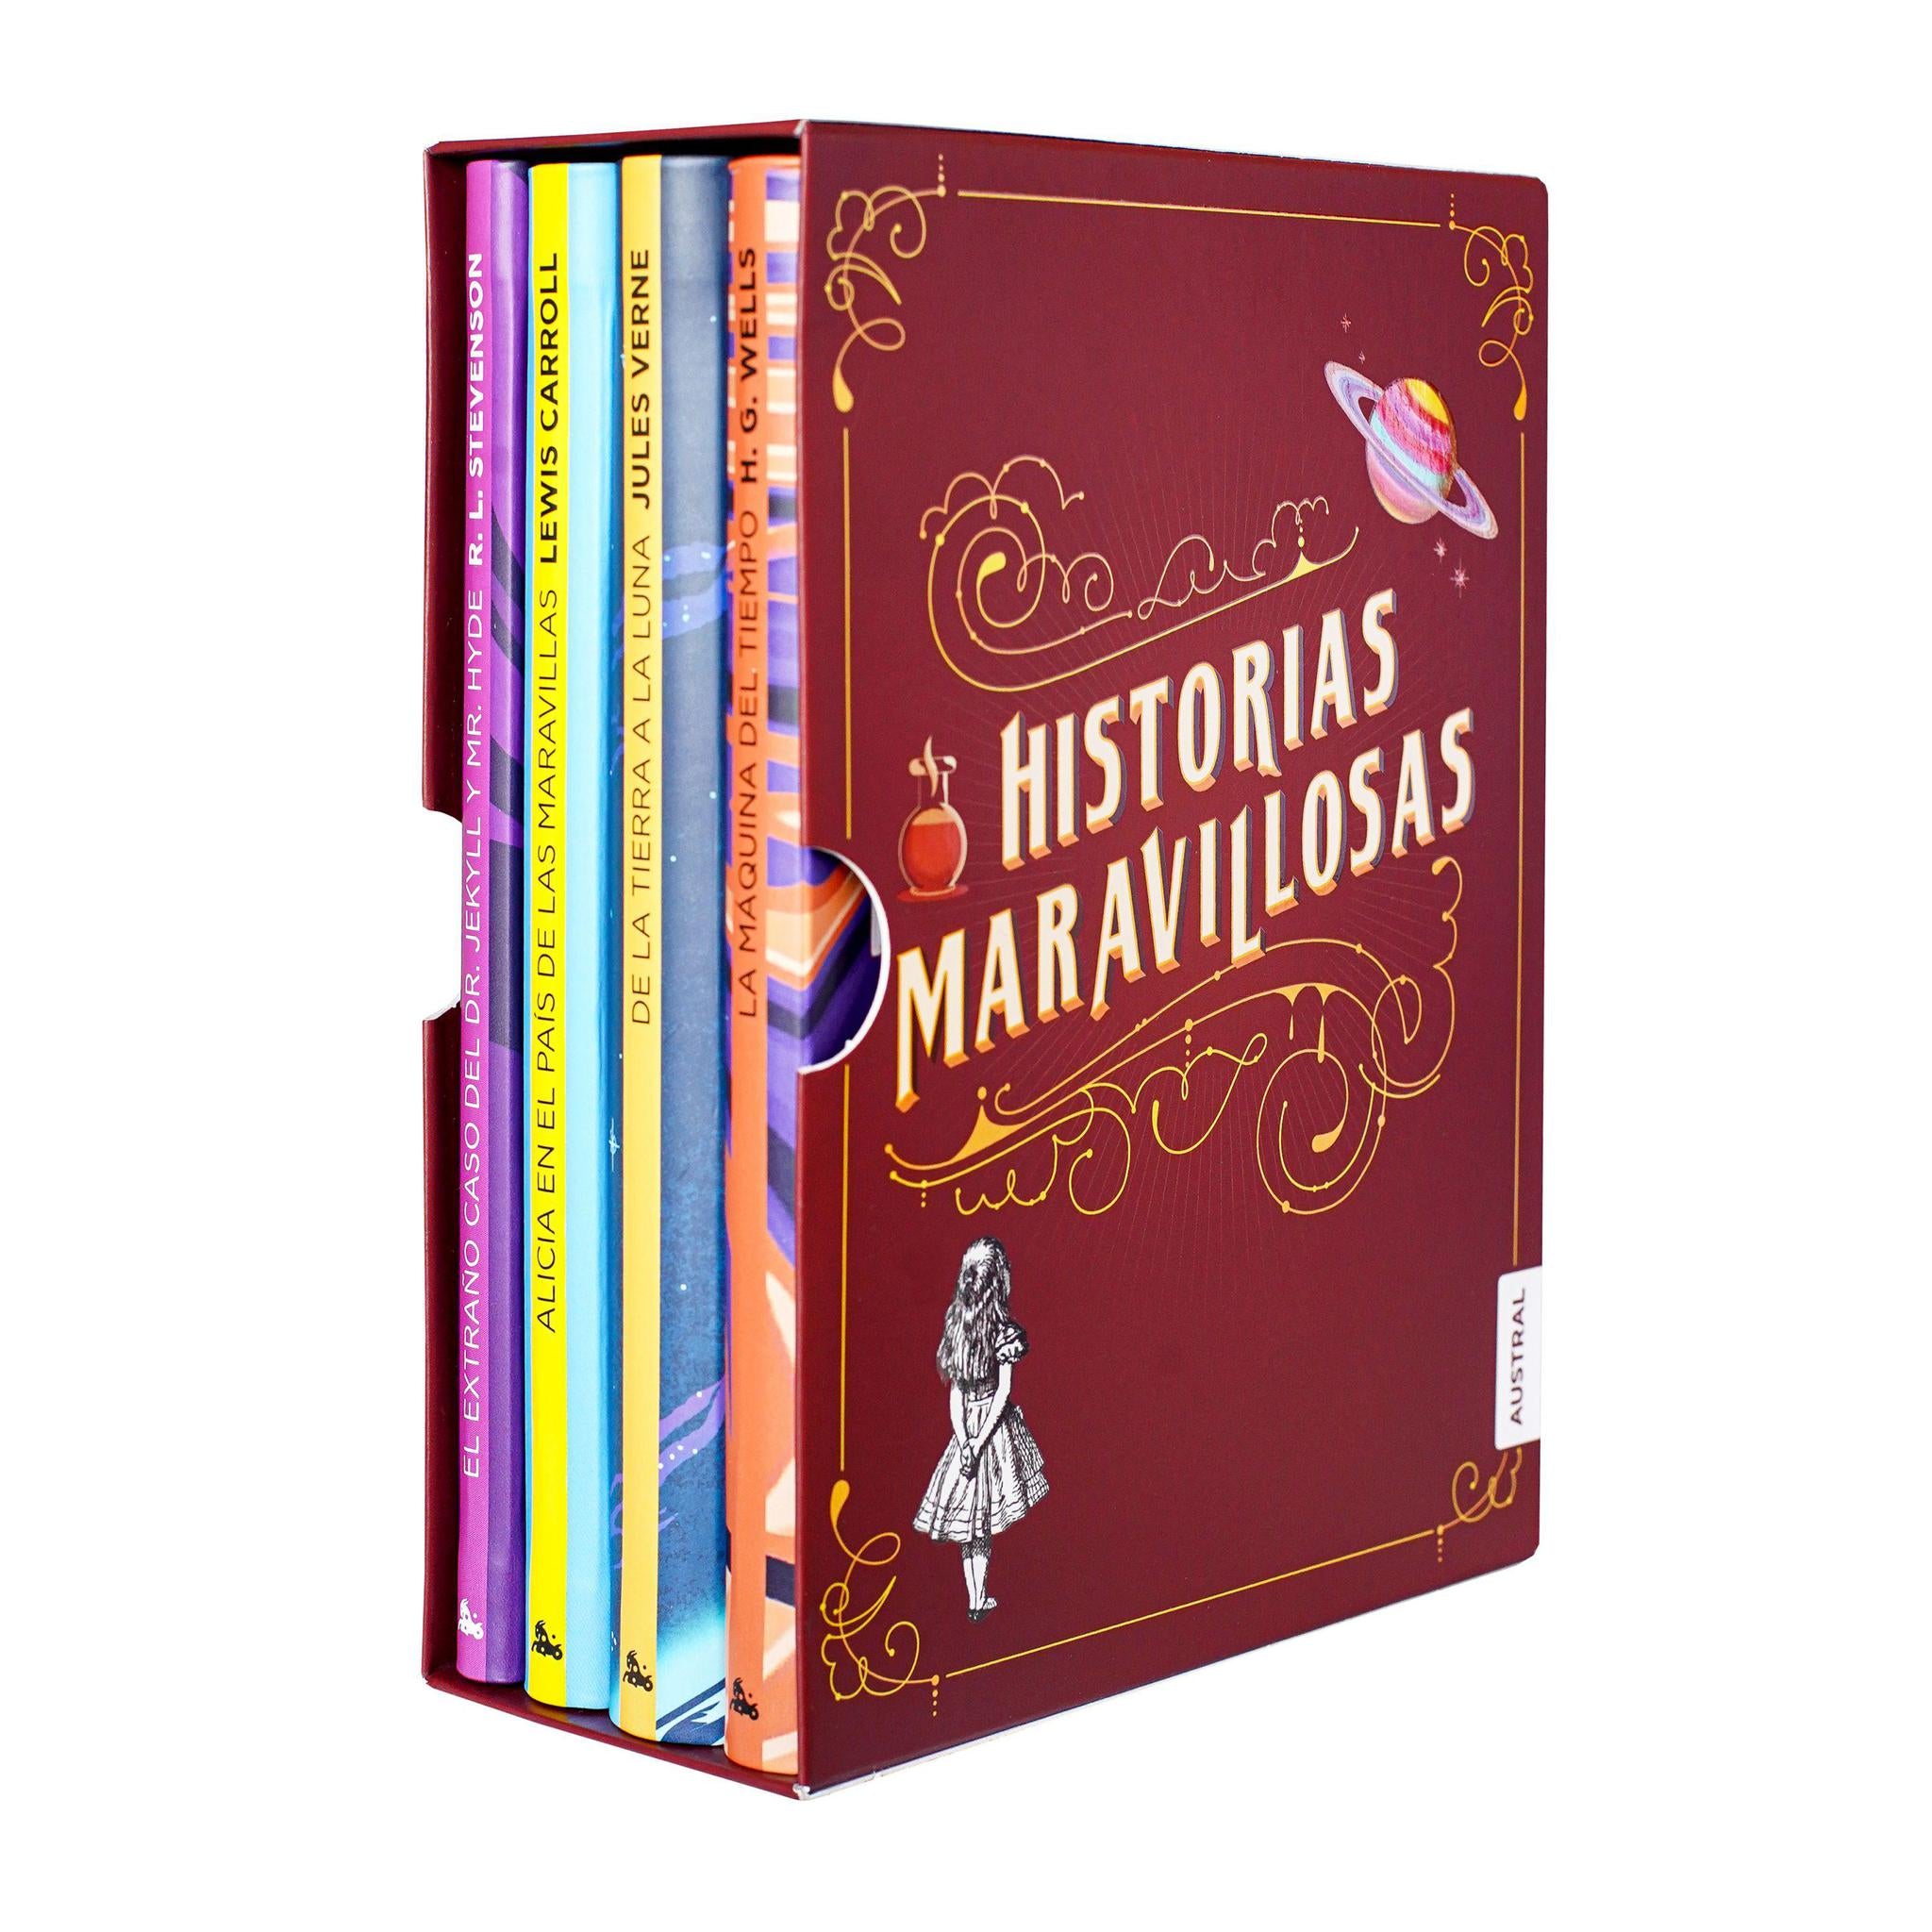 Pack Historias Maravillosas - Julio Verne, H.G. Wells, Lewis Carrol, Robert Louis Stevenson